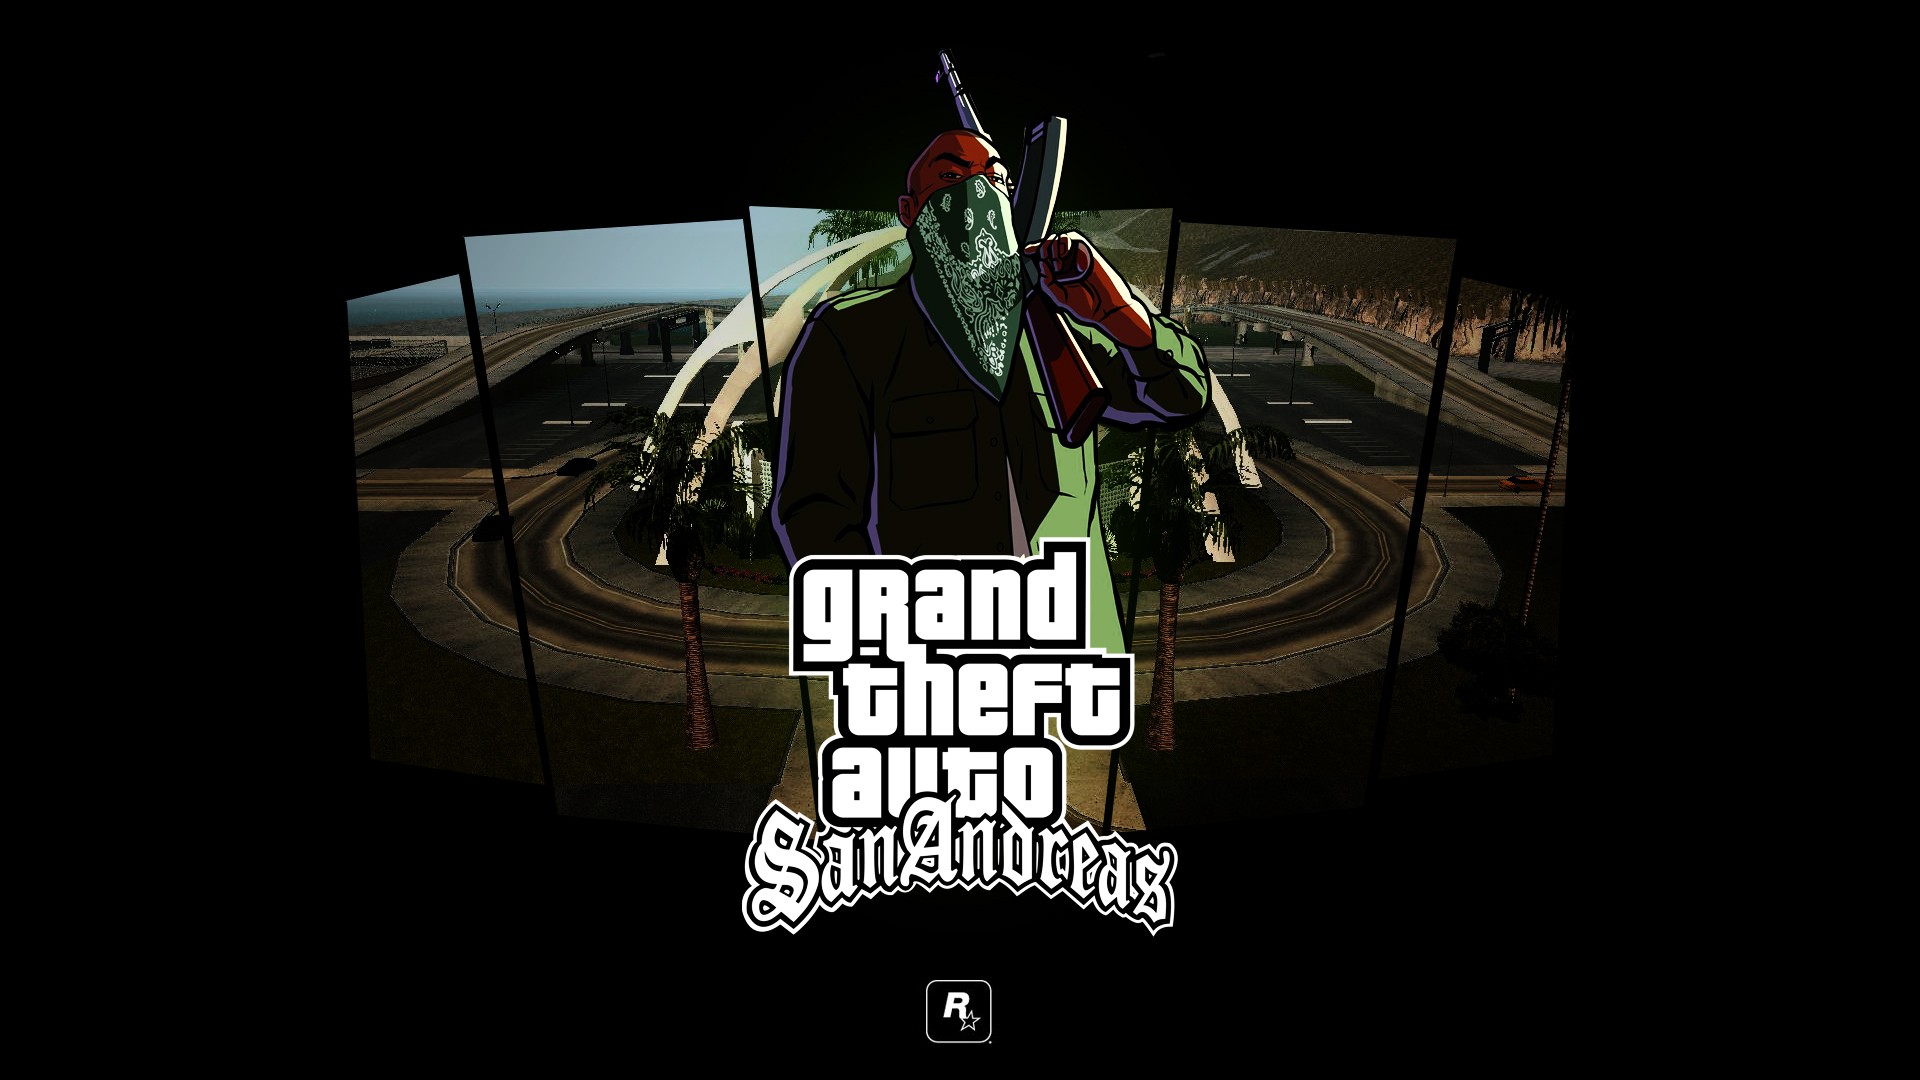 Grand Theft Auto San Andreas, Rockstar Games, Video Games, PlayStation 2 Wallpaper